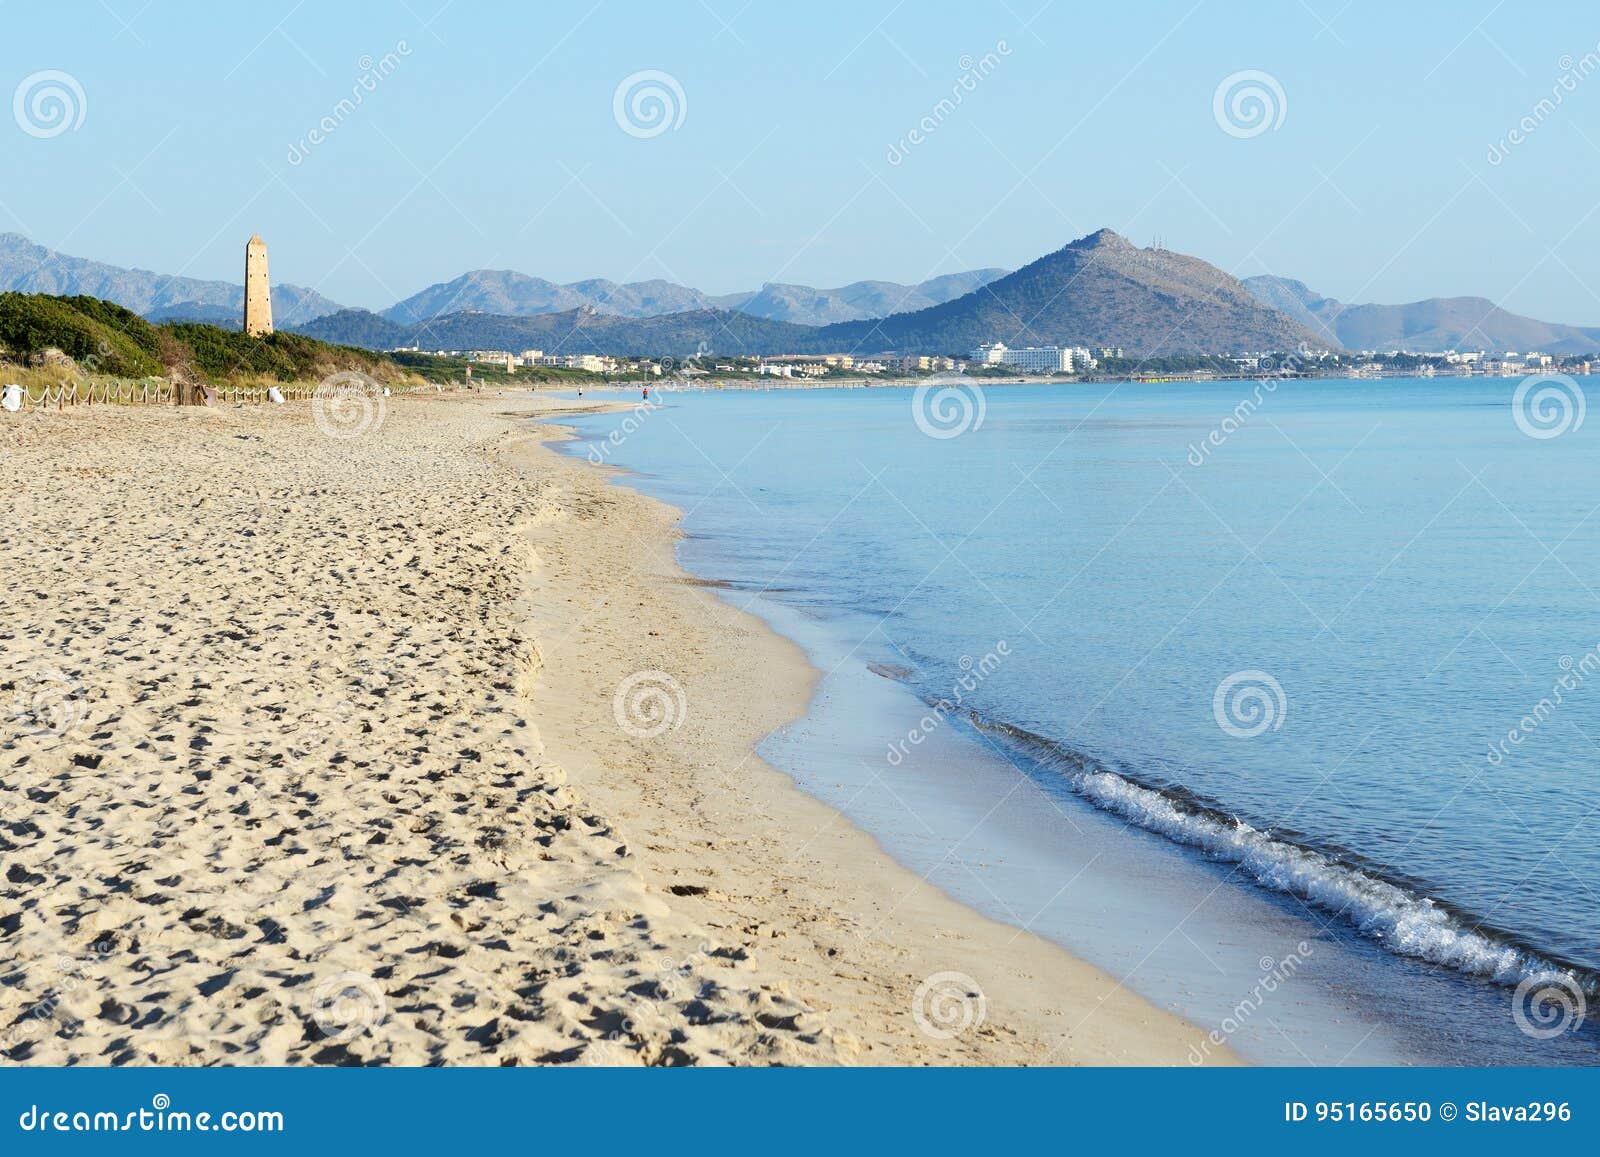 the beach in playa de muro